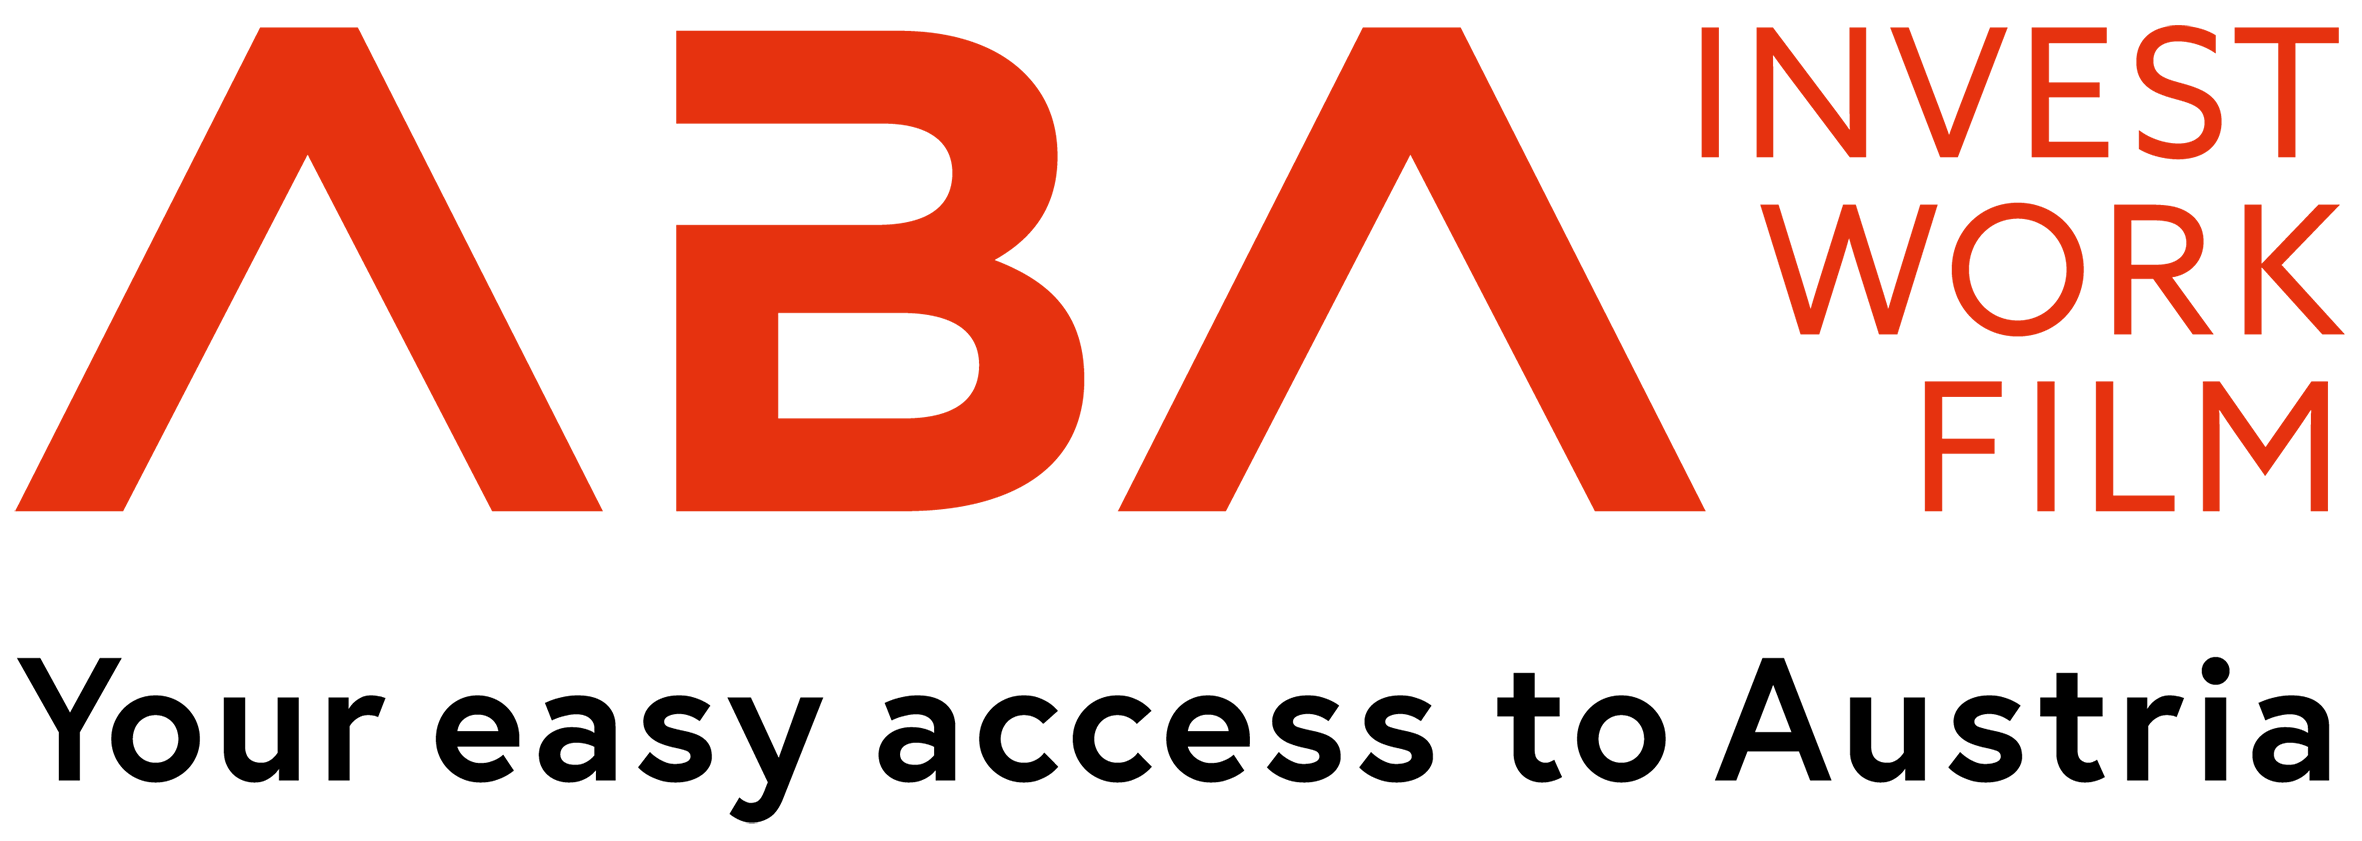 Austrian Business Agency's logo